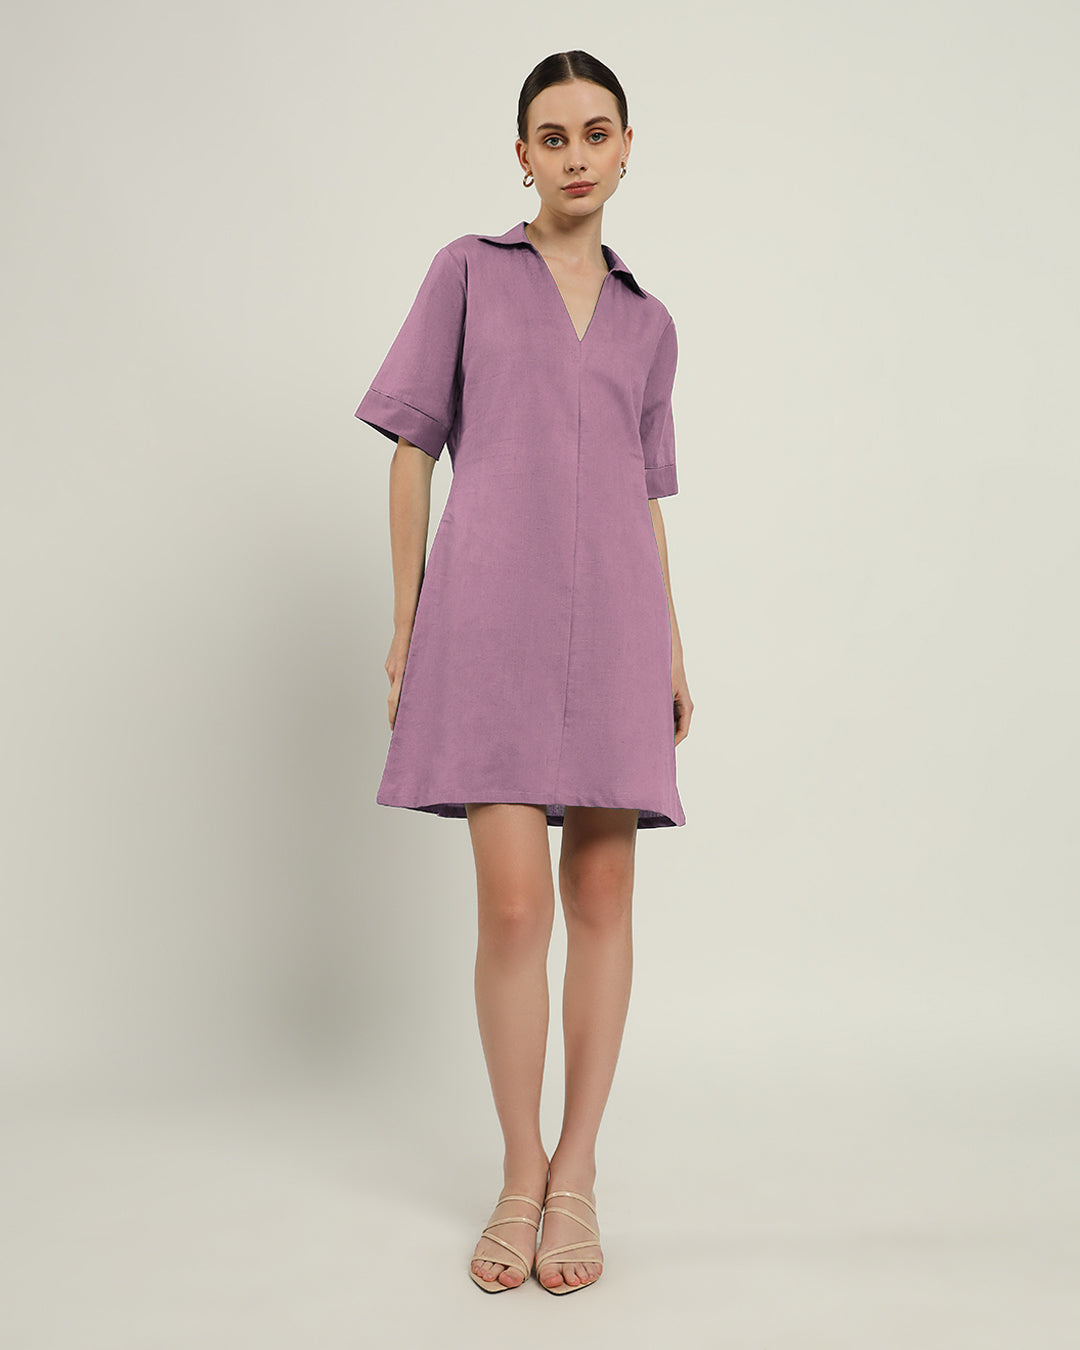 The Ermont Purple Swirl Dress